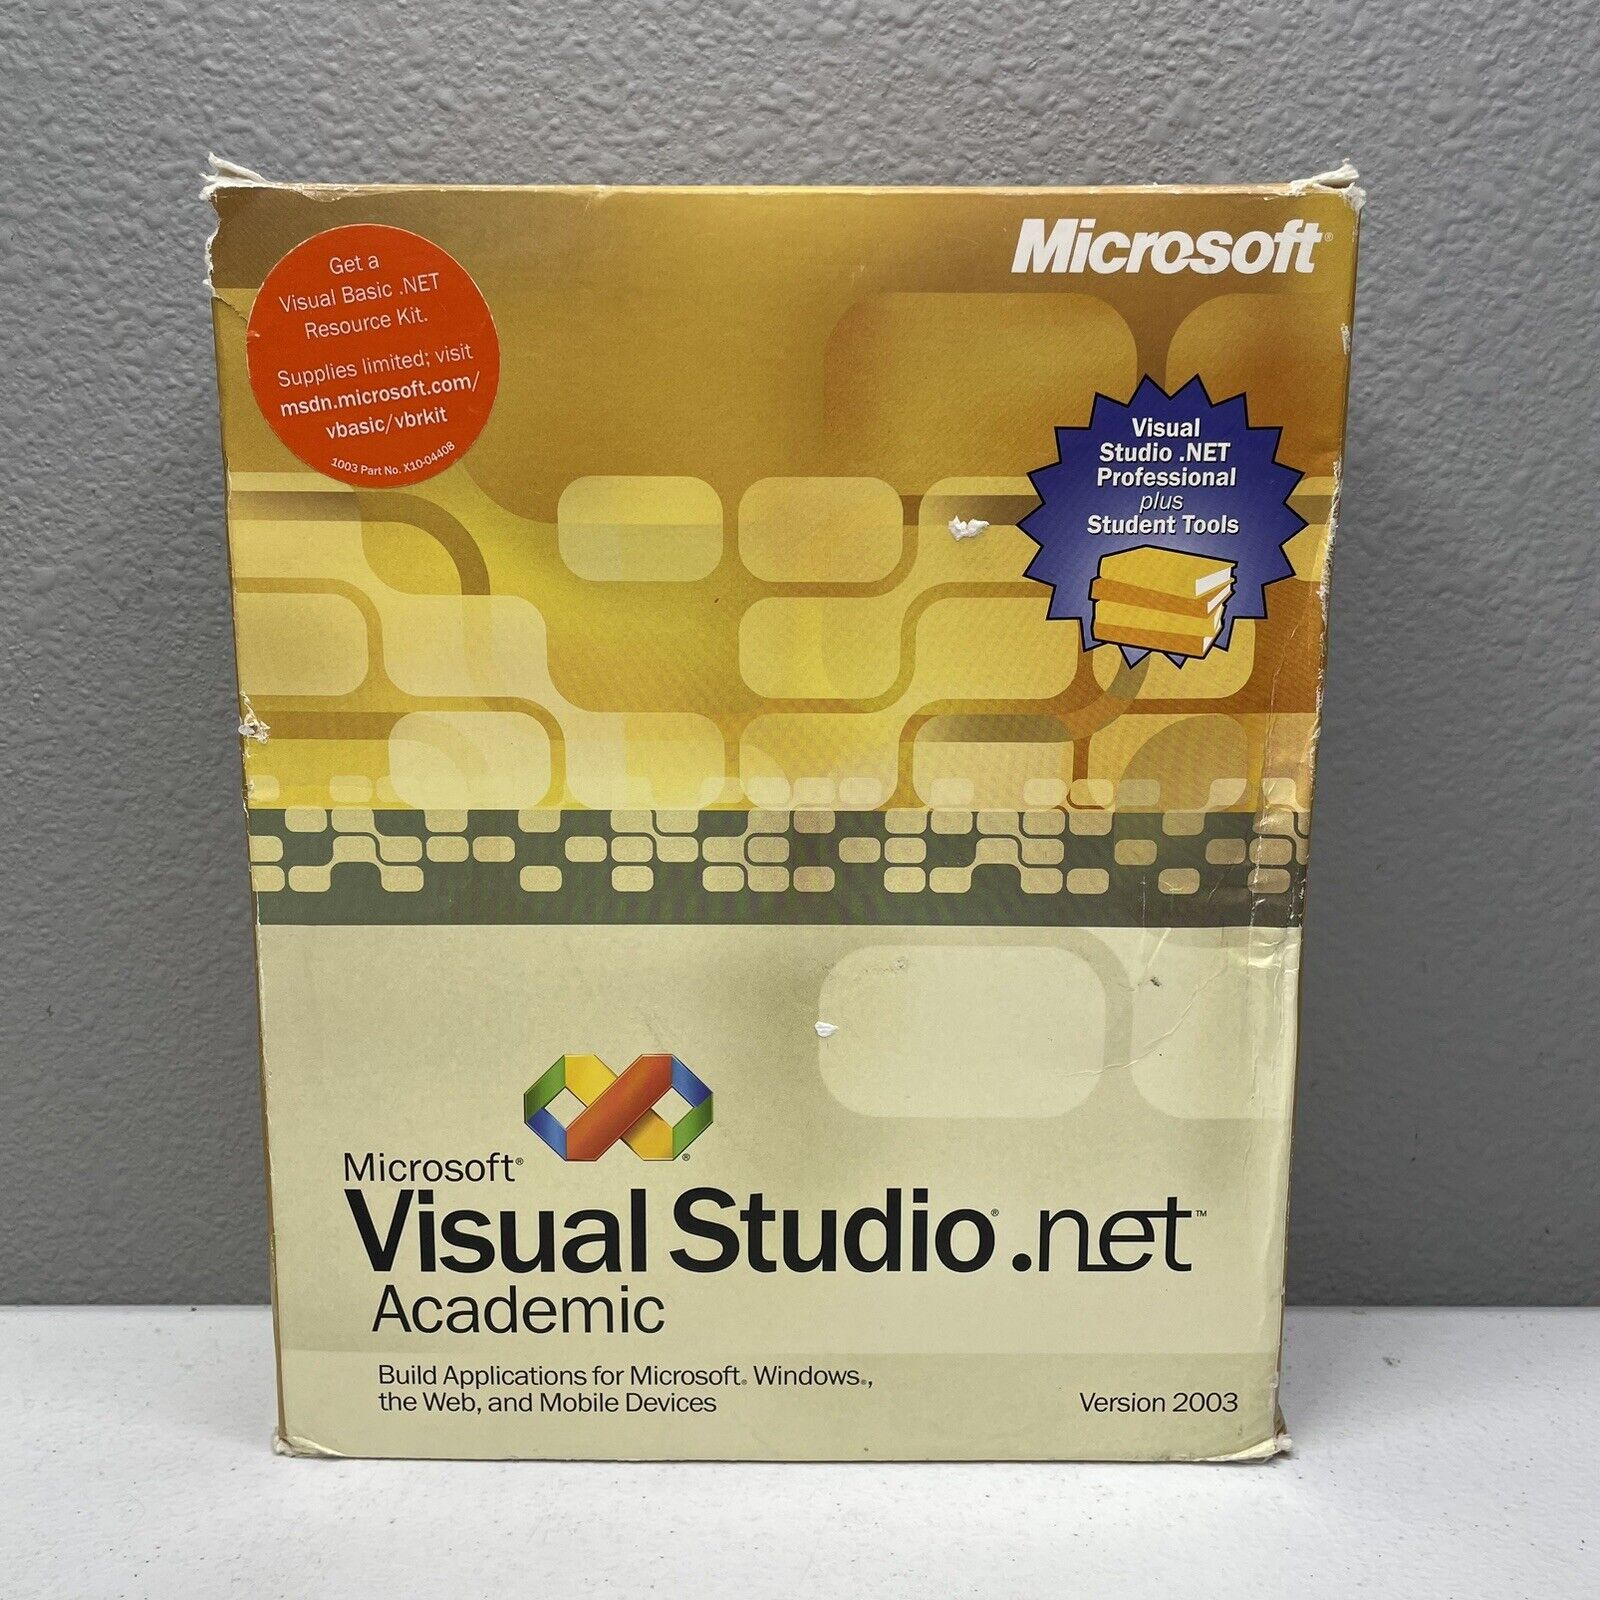 Microsoft Visual Studio .net 2003 Academic with Box CDs Manuals Key